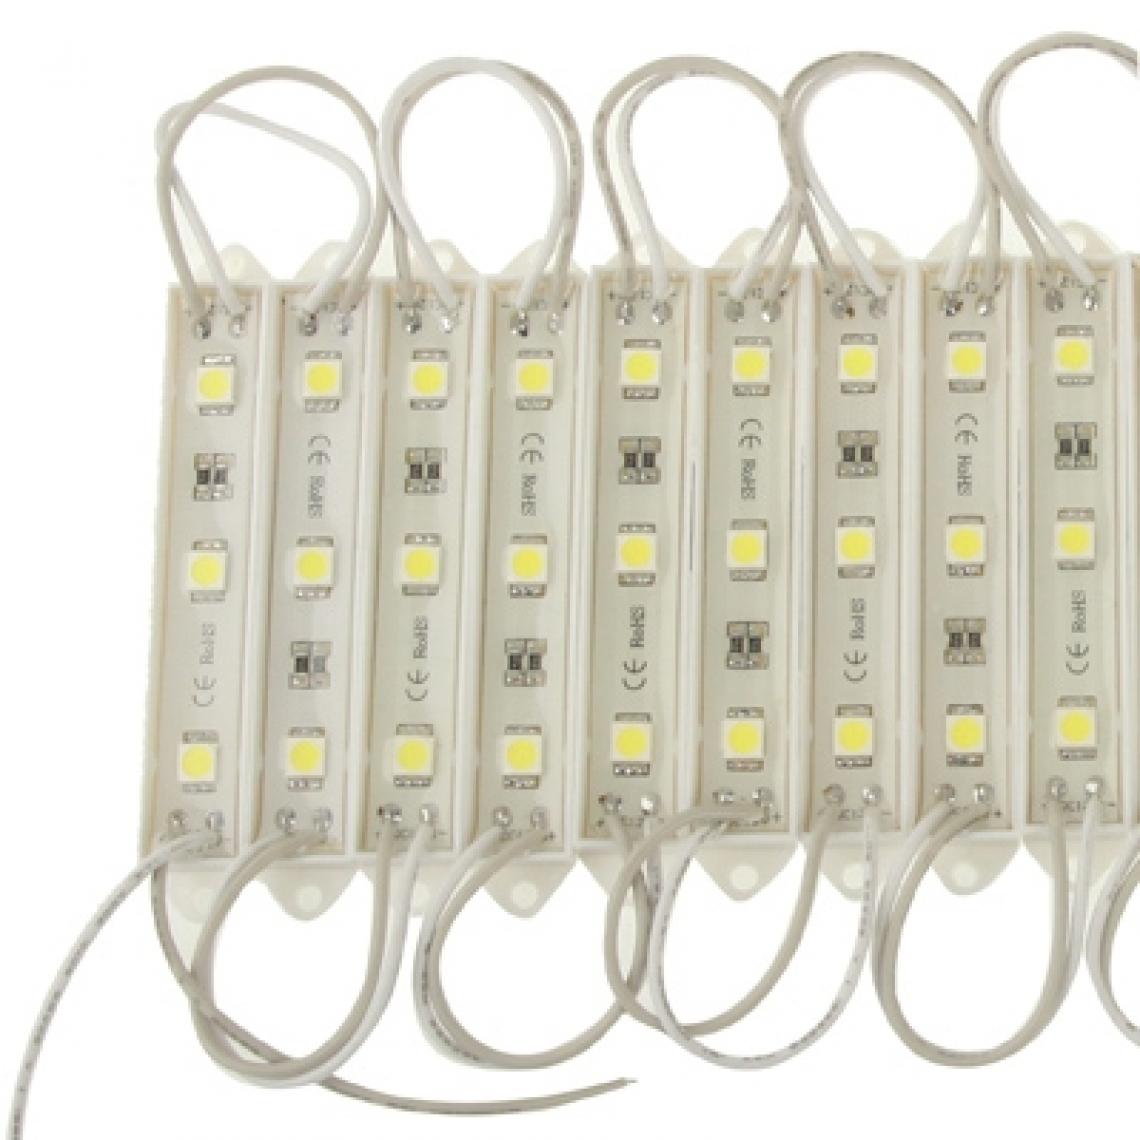 Wewoo - Module LED blanc Bande lumineuse de du 5050 SMD de 20x 3-LED, DC 12V - Ampoules LED